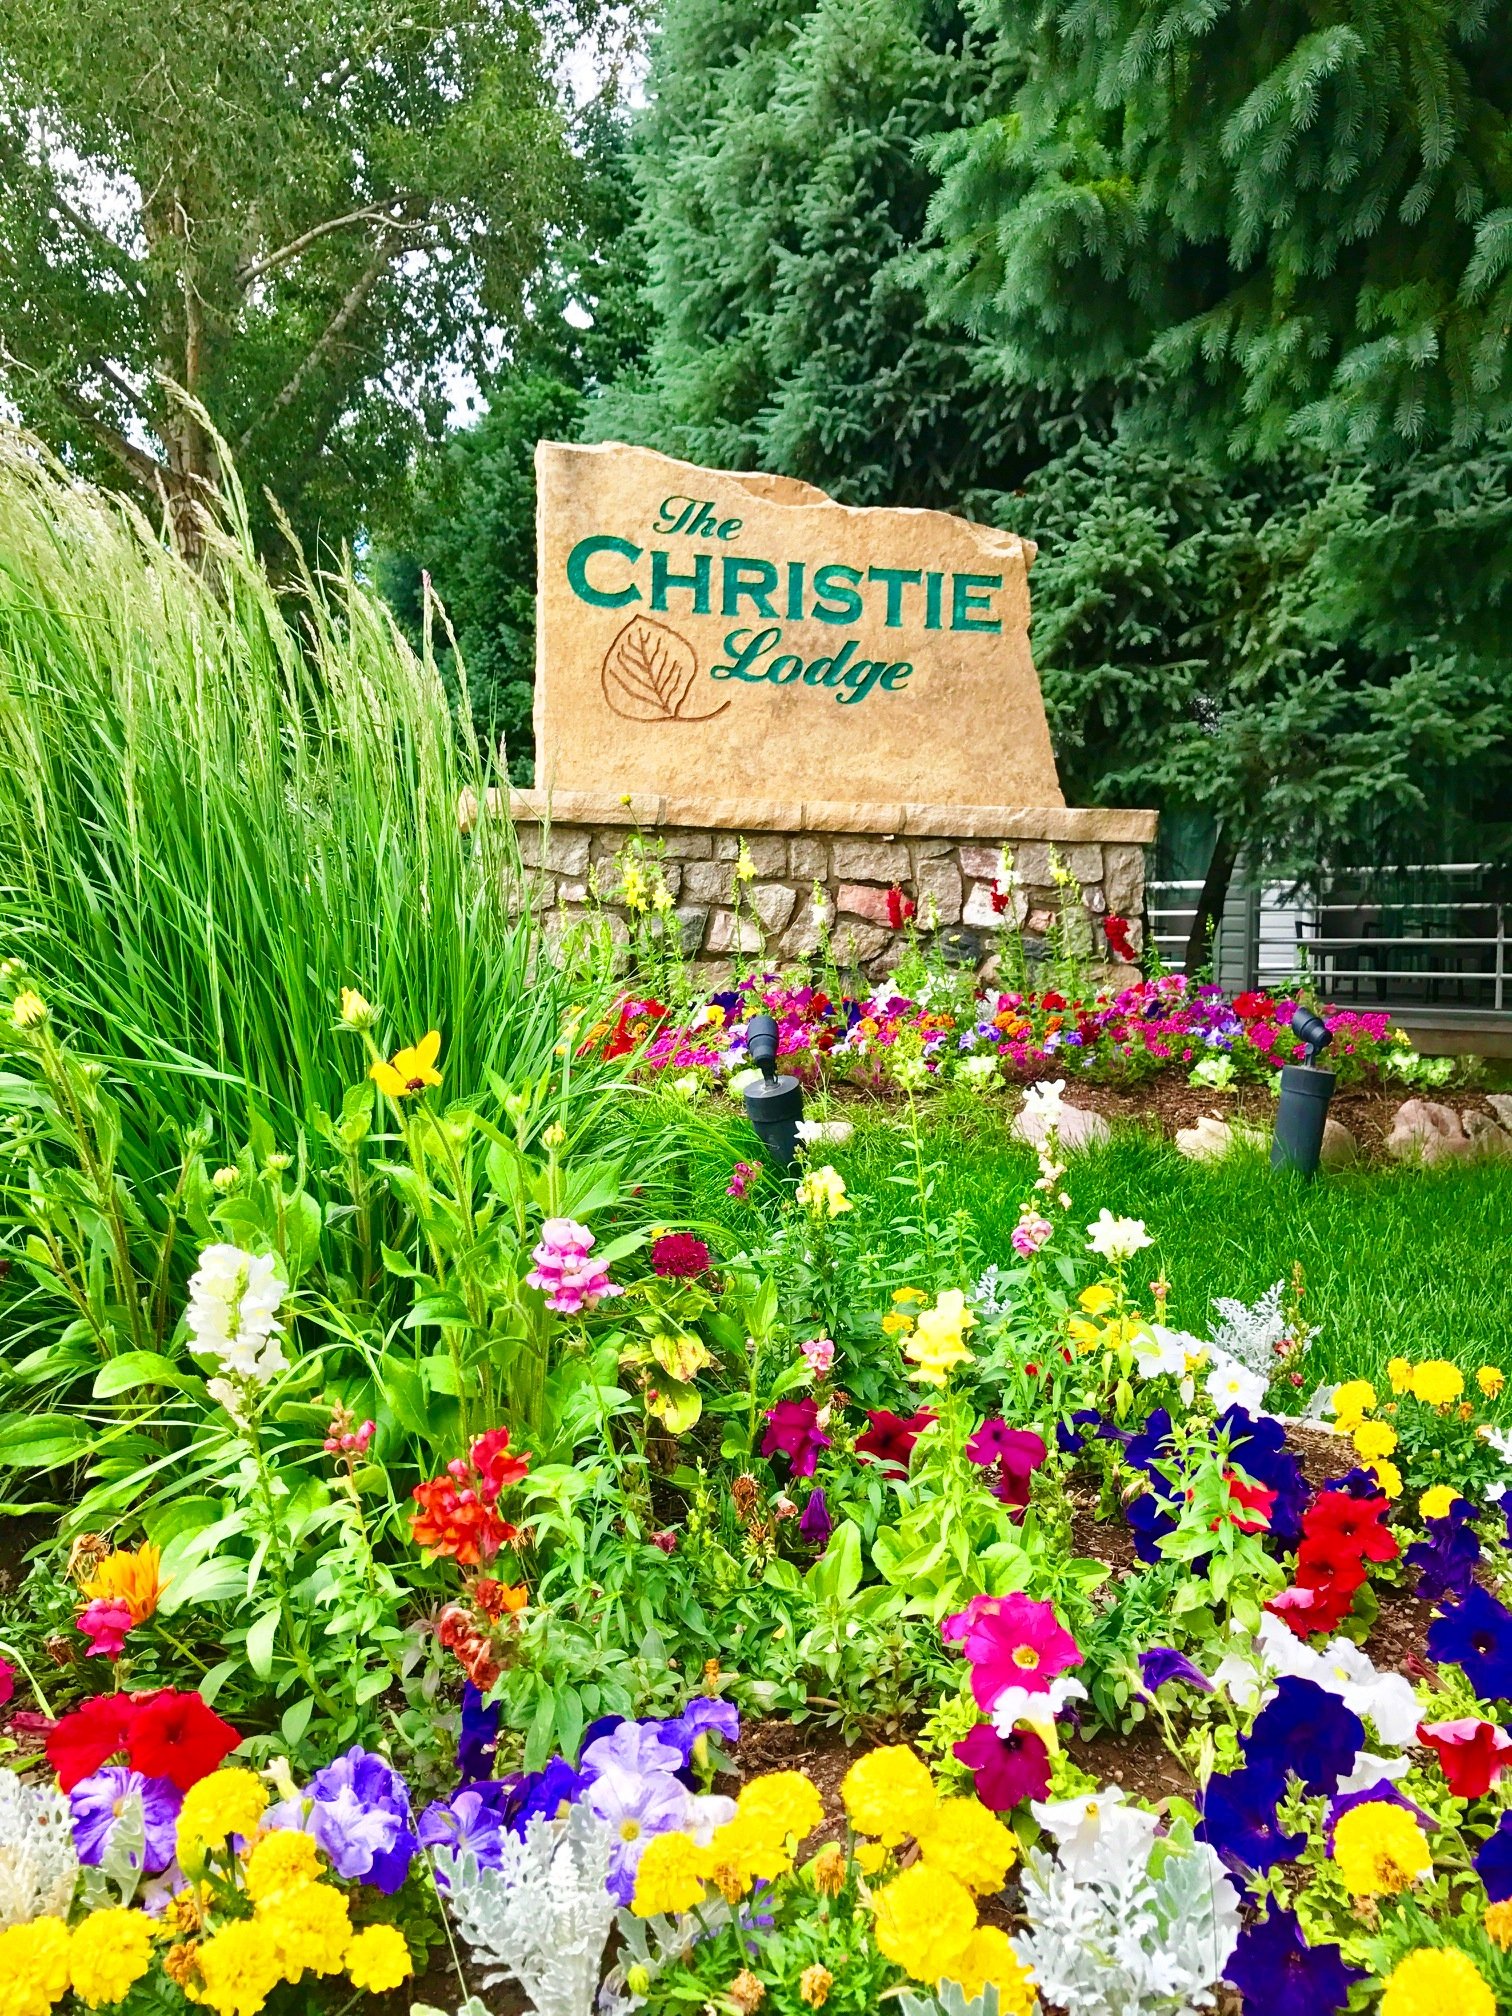 Christie Lodge Sign